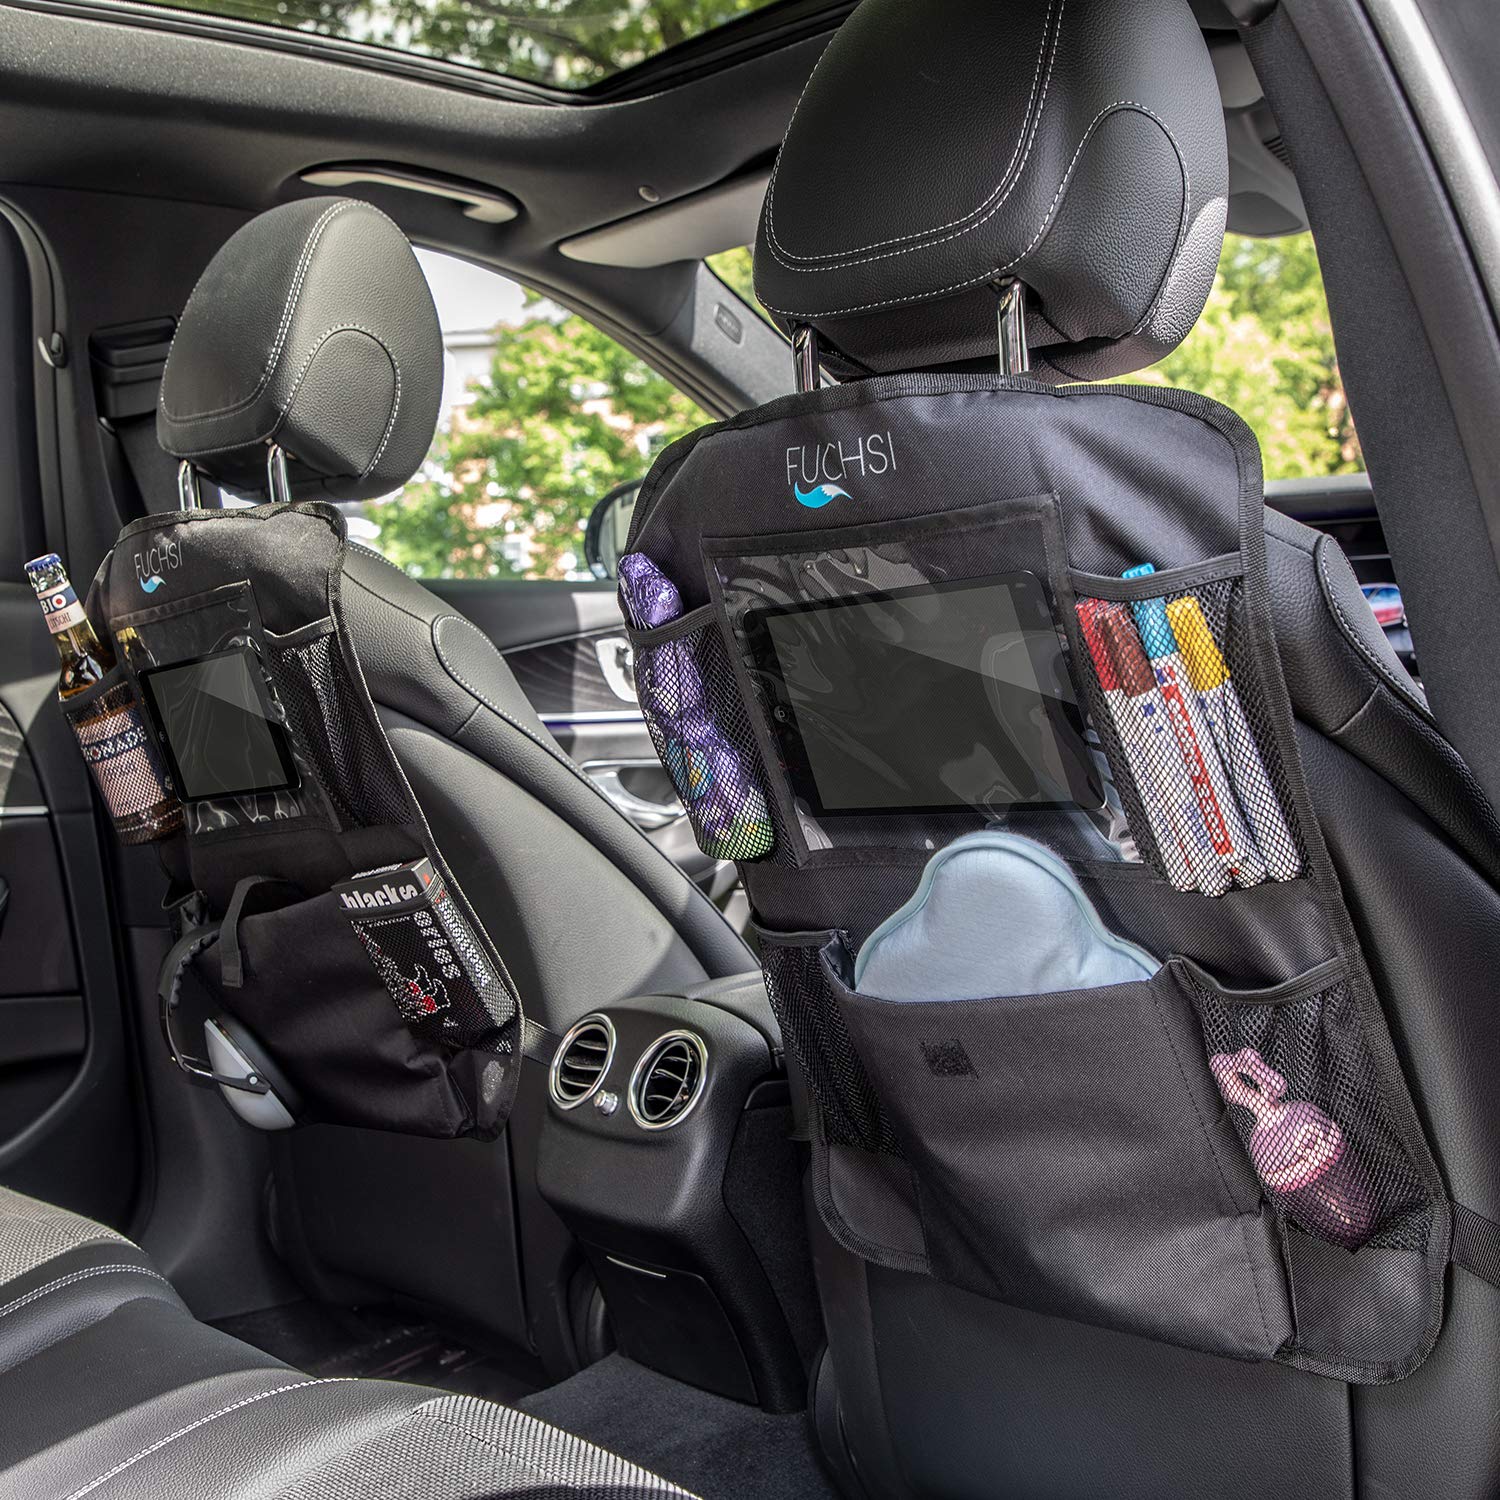 Forroby Auto Rücksitz Organizer für Babys Spielzeug Getränke